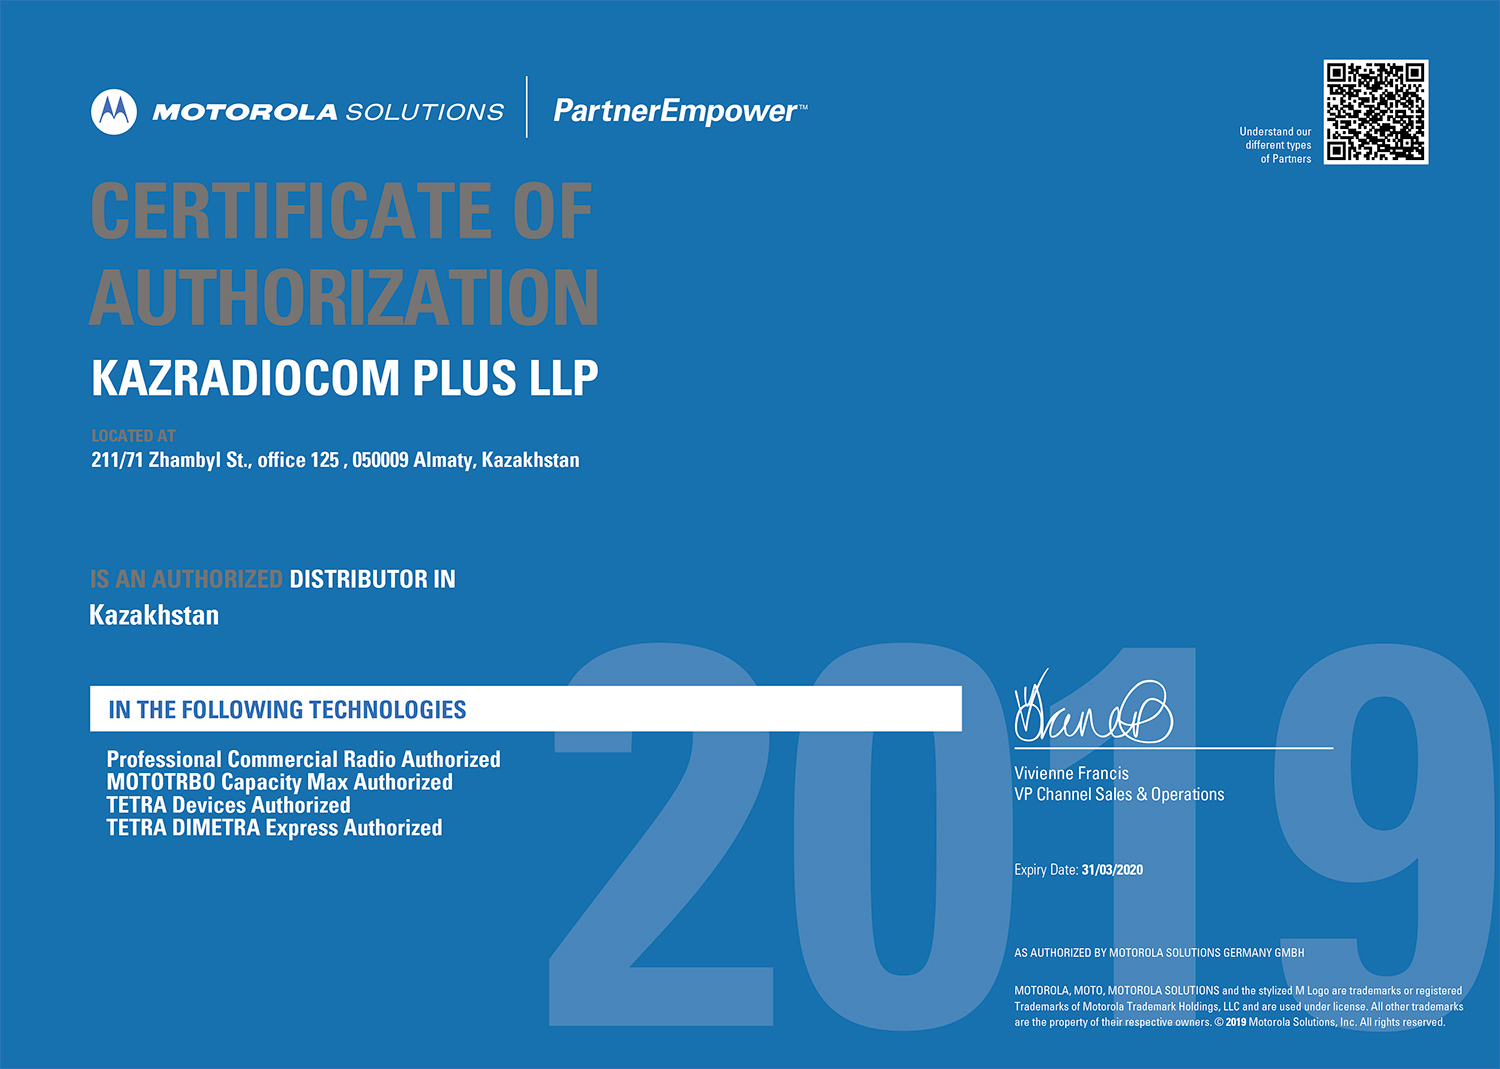 Сертификат дистрибьютора_Kazradiocom Plus LLP_2019